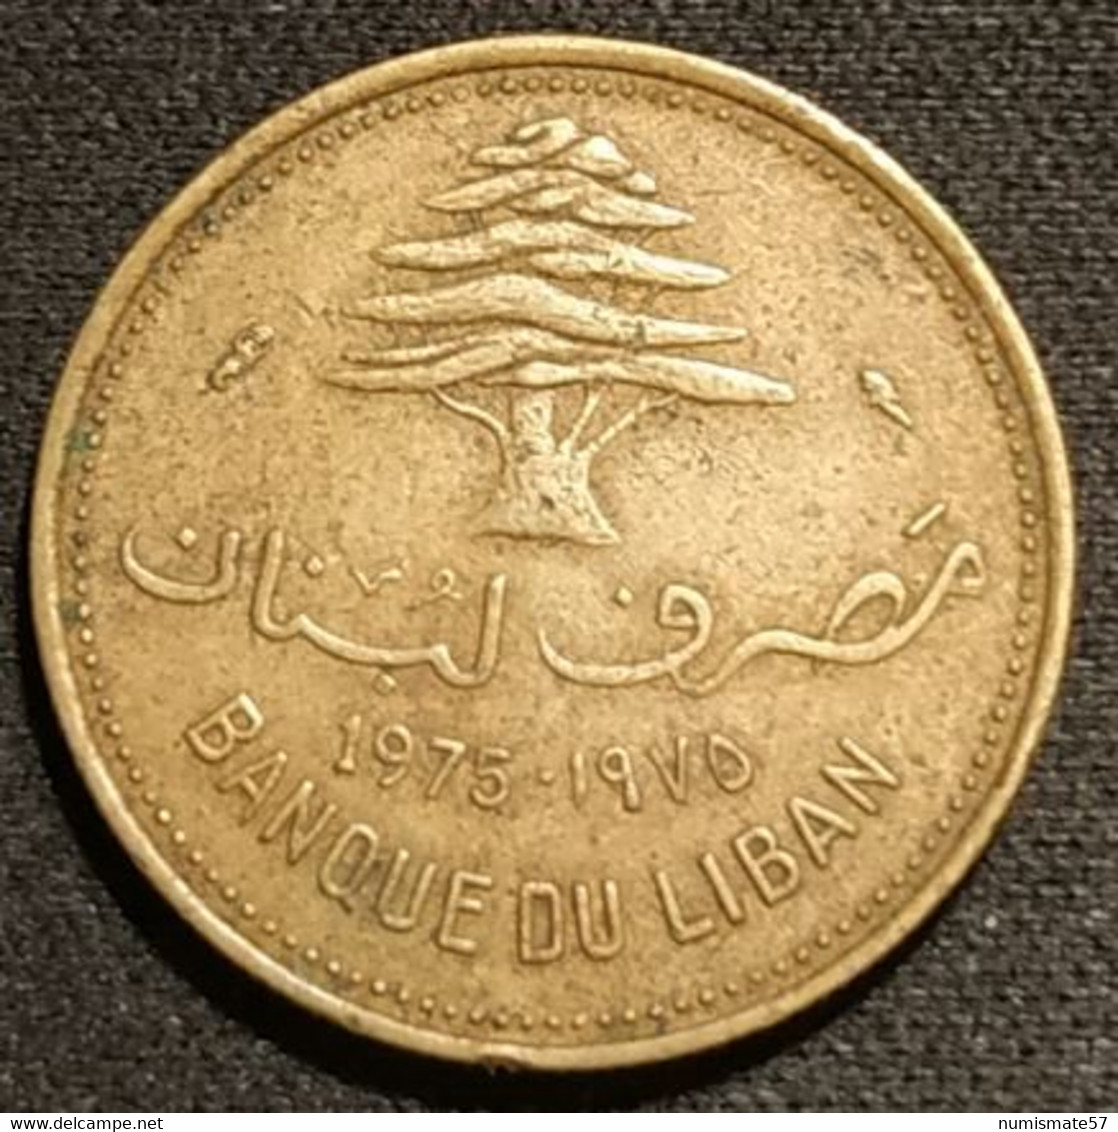 LIBAN - LEBANON - 10 PIASTRES 1975 - KM 26 - Liban